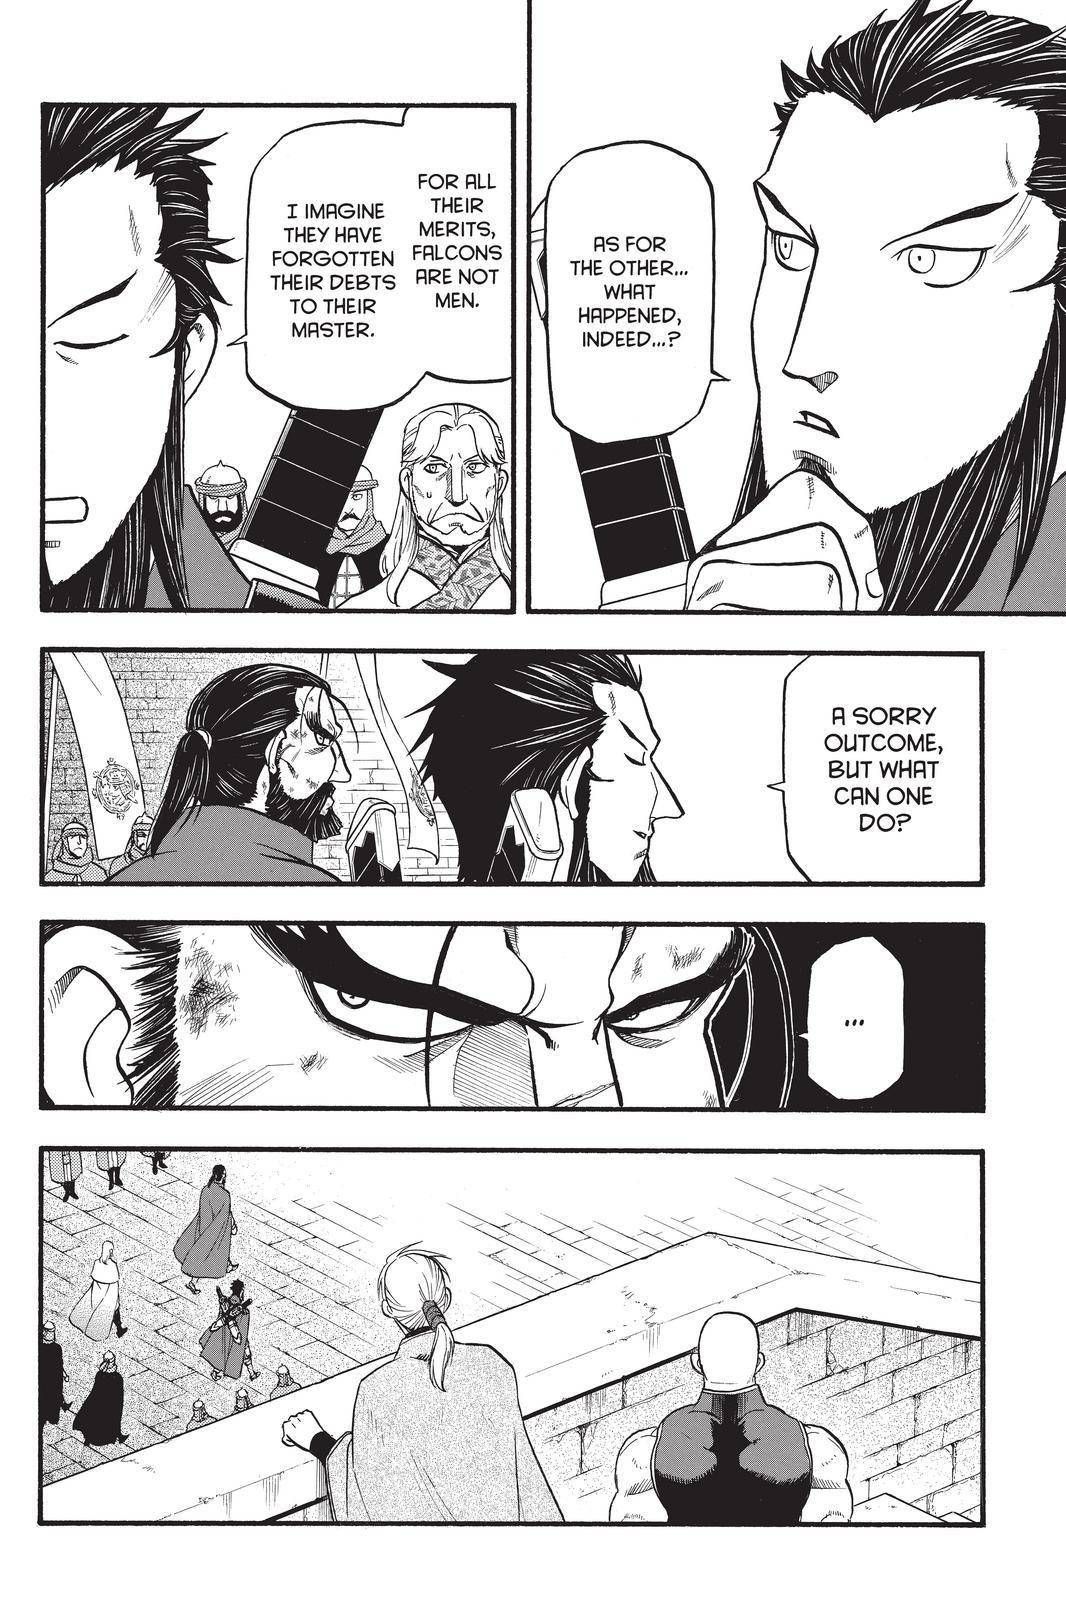 Arslan Senki (ARAKAWA Hiromu) chapter 92 page 4